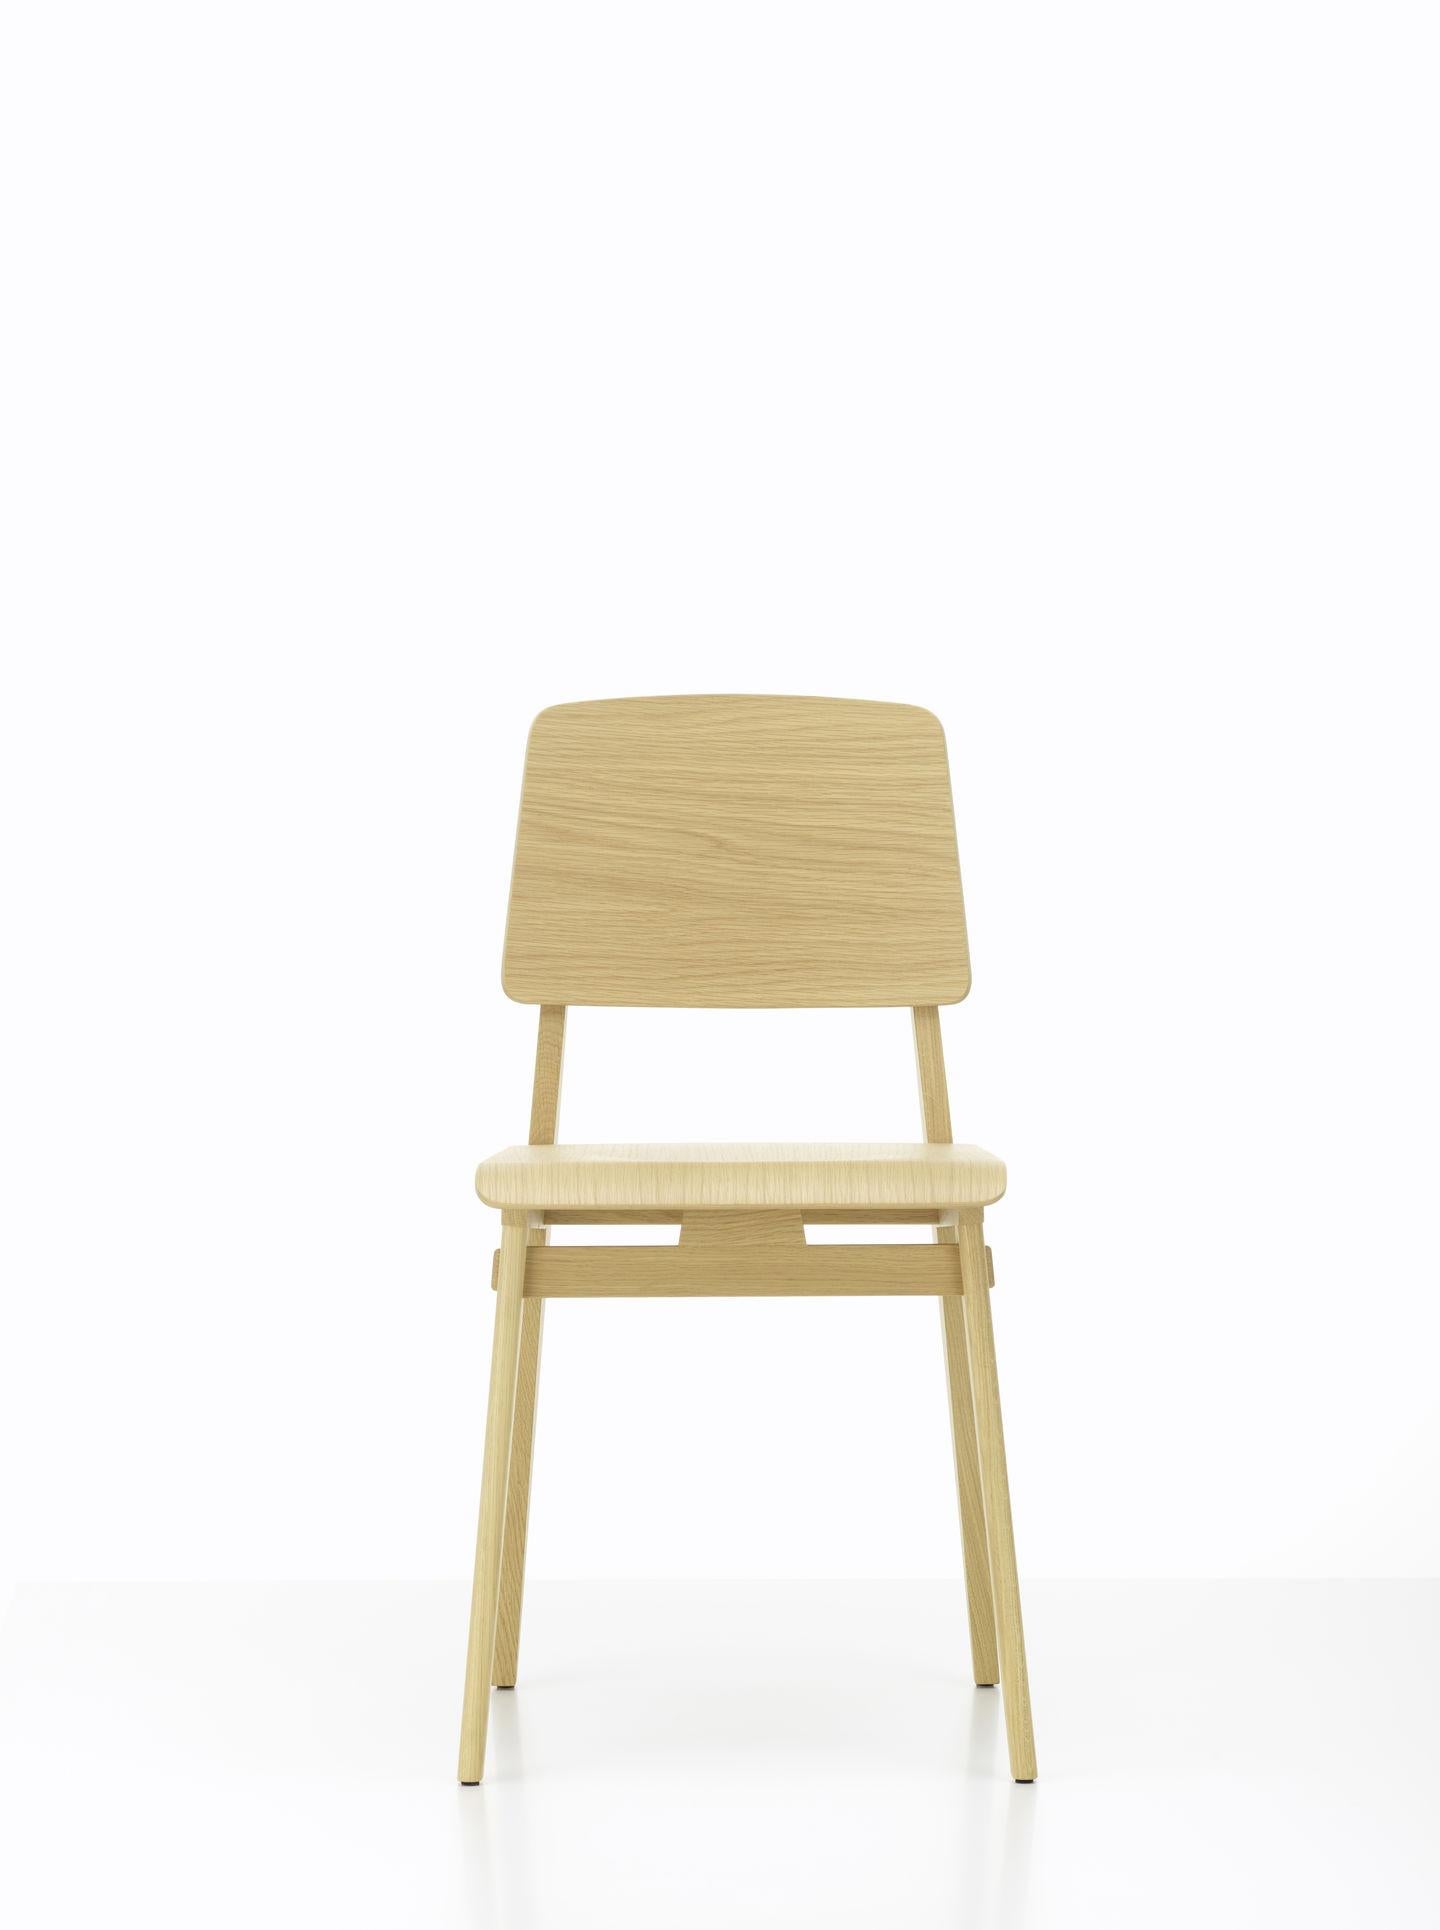 Jean Prouvé Light Oak Chaise Tout Bois Chair by Vitra 1